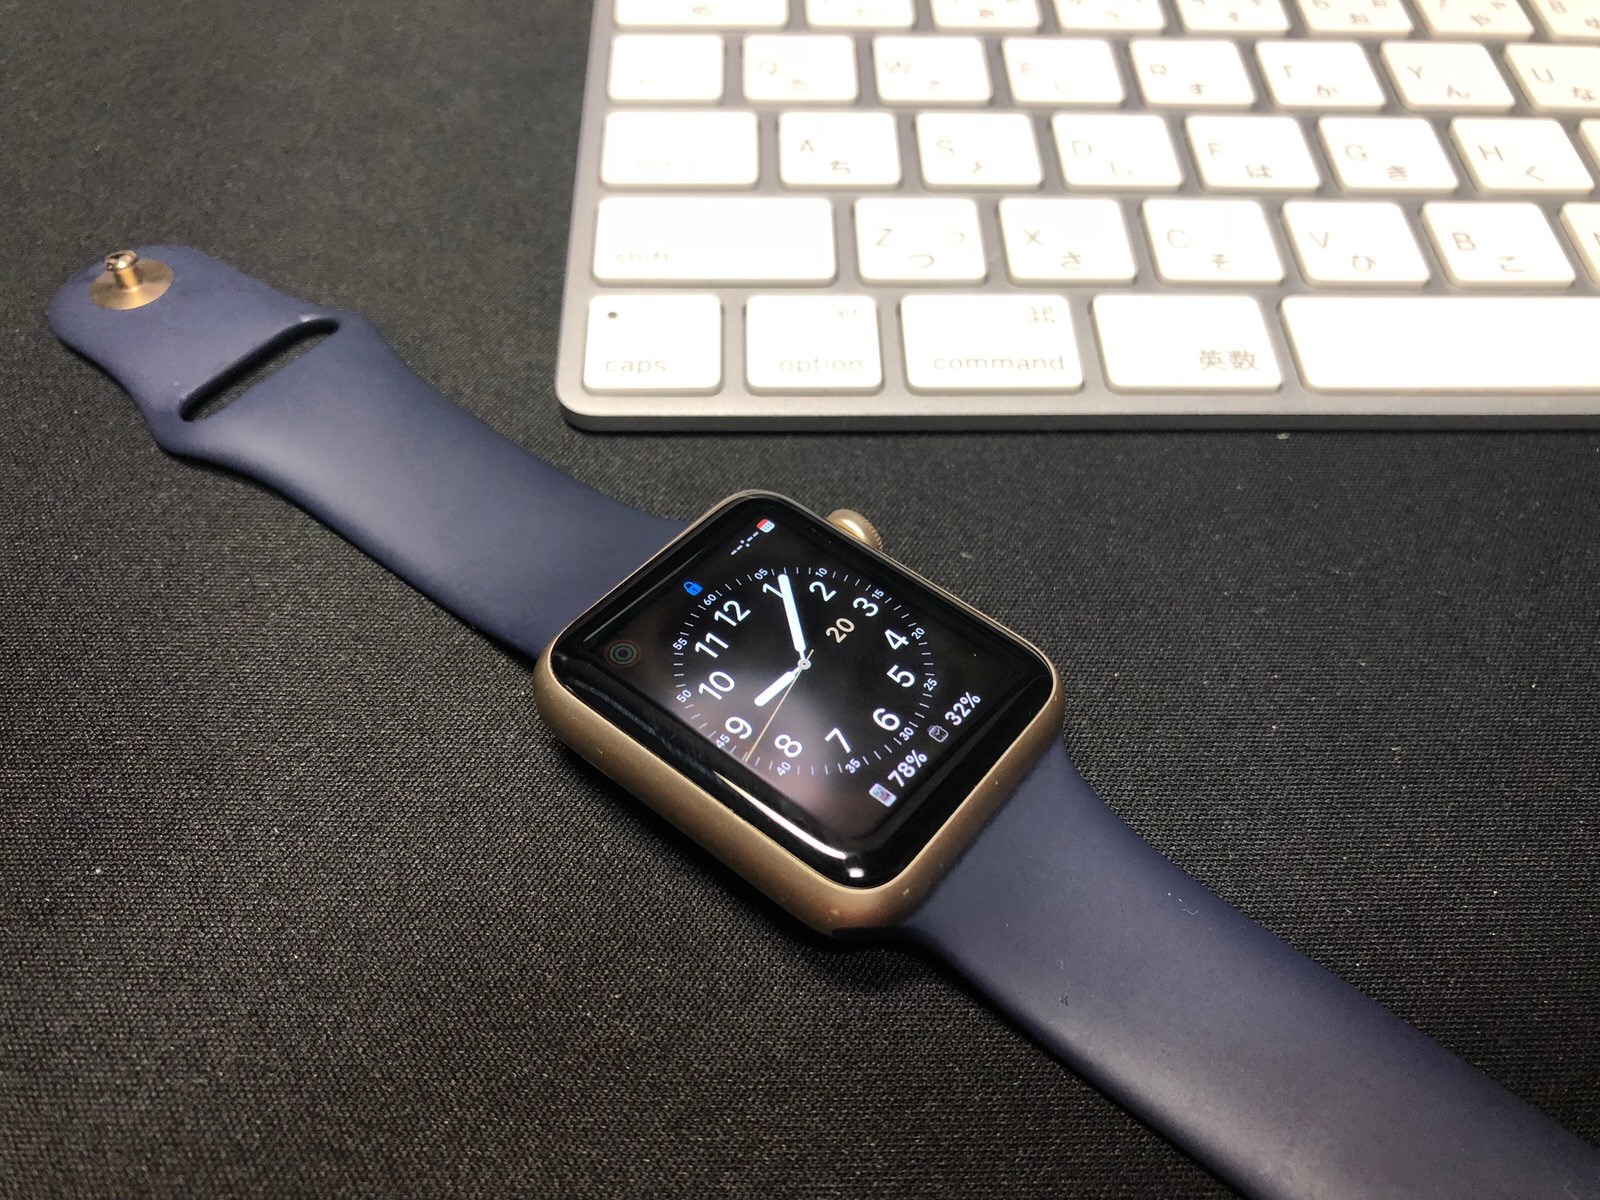 [Apple Watch]待ちに待った新型 Apple Watch Series 4 が配送されました！